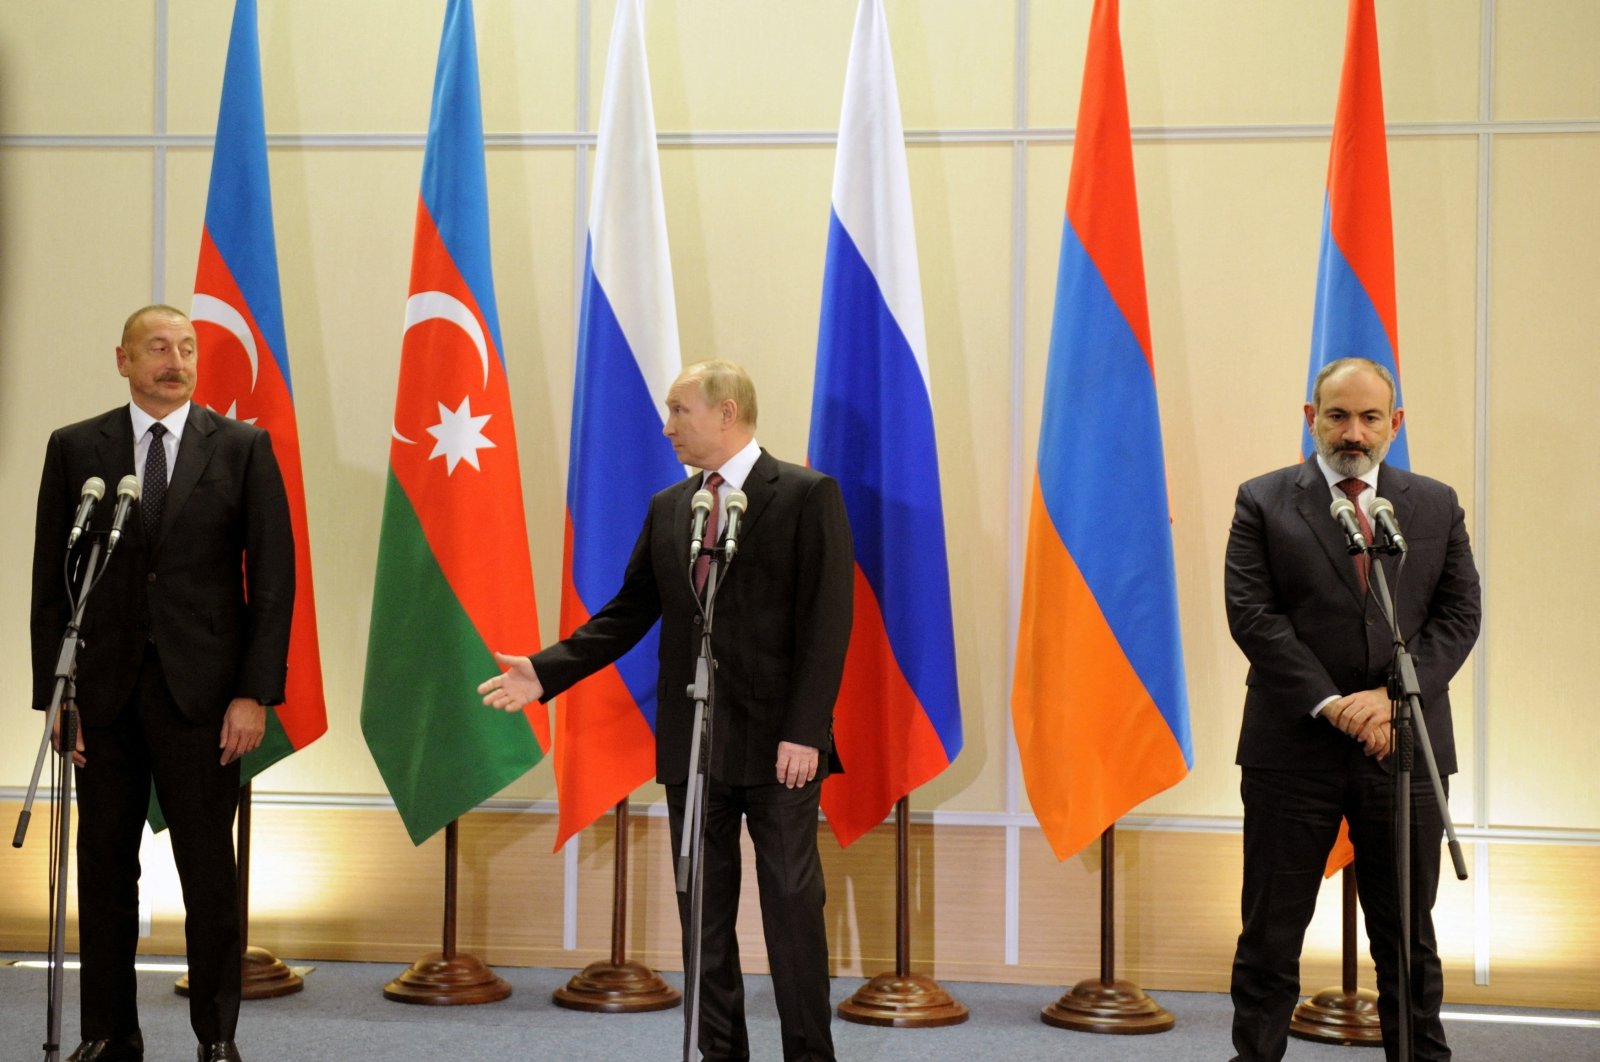 Azerbaijani President Ilham Aliyev (L), Russian President Vladimir Putin (C) and Armenian Prime Minister Nikol Pashinian attend a news conference following their trilateral meeting in Sochi, Russia, Nov. 26, 2021. (REUTERS Photo)